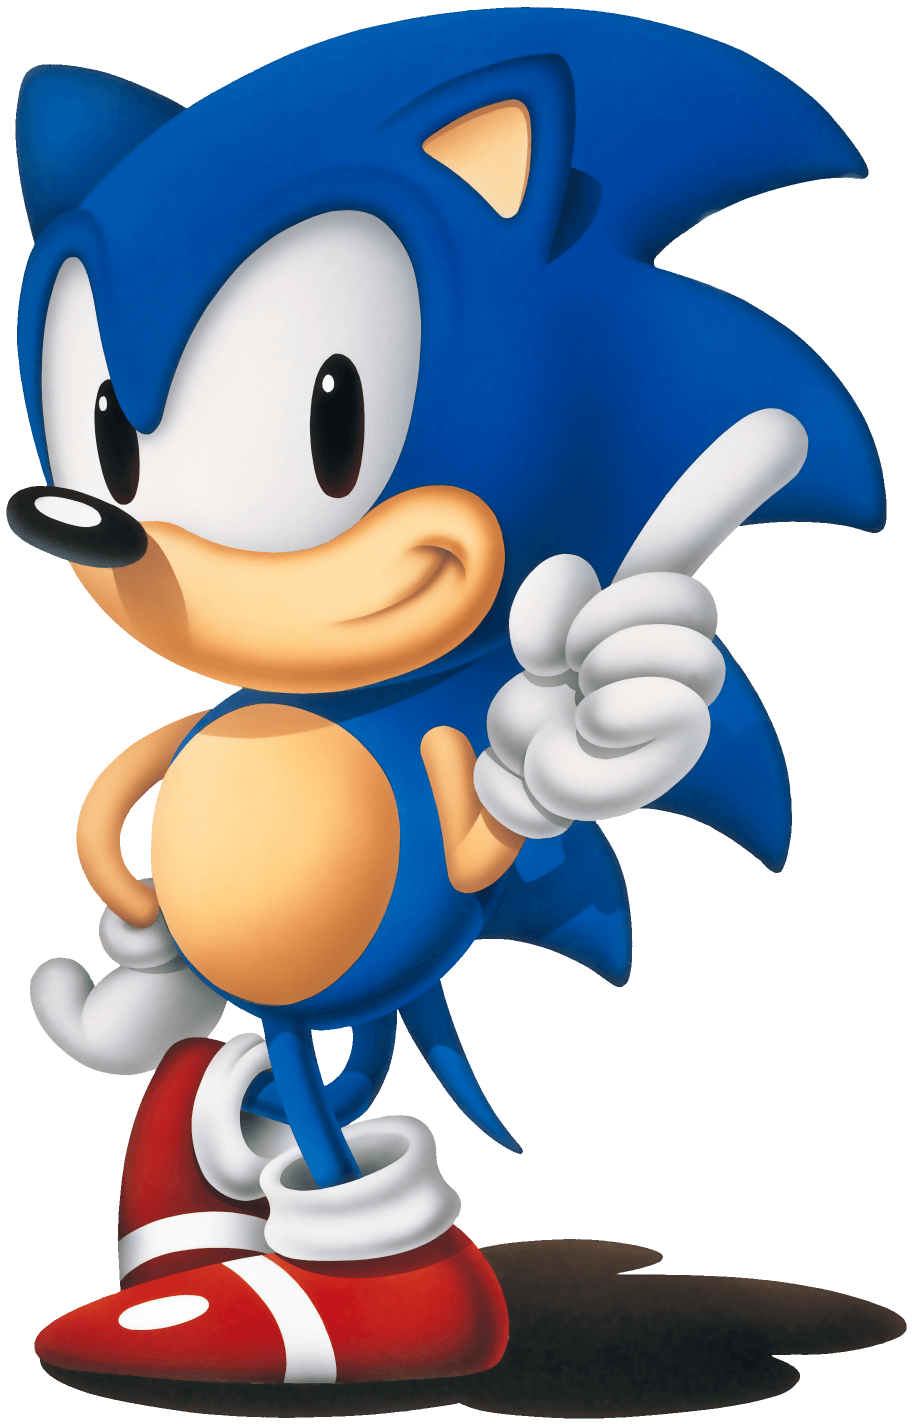 Video Game Sonic The Hedgehog wallpaper Desktop, Phone, Tablet